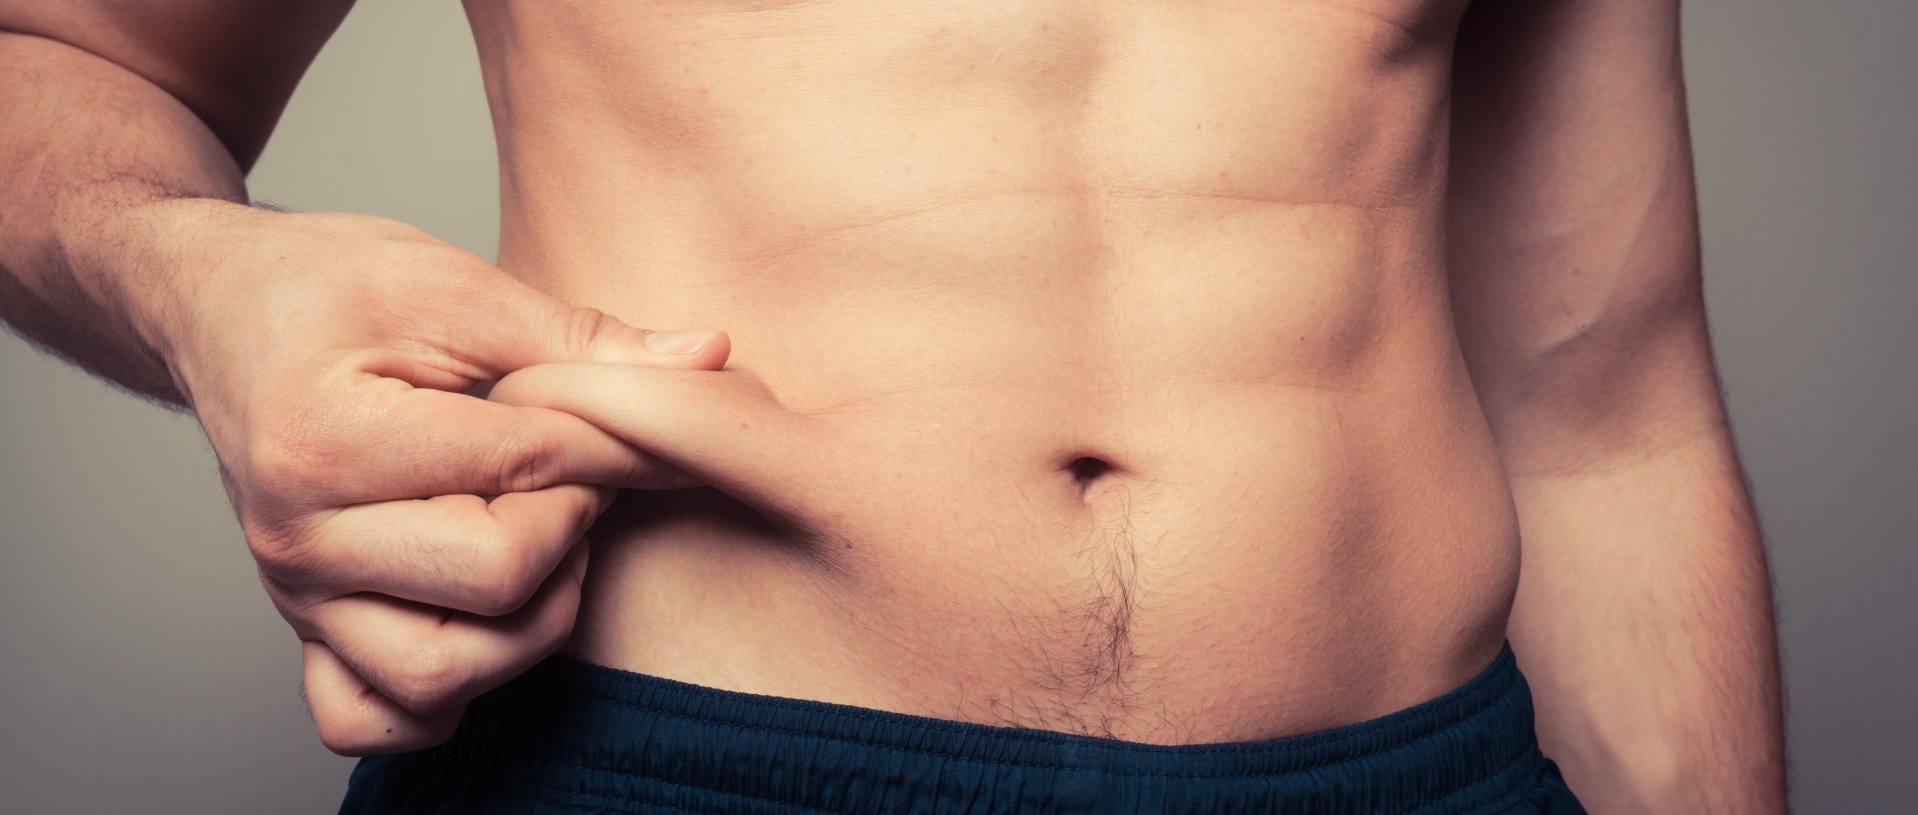 tummy tuck in men | male abdominoplasty surgery